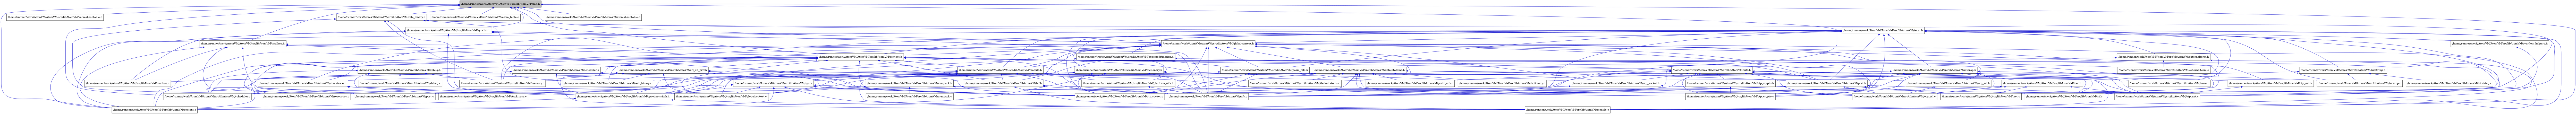 digraph {
    graph [bgcolor="#00000000"]
    node [shape=rectangle style=filled fillcolor="#FFFFFF" font=Helvetica padding=2]
    edge [color="#1414CE"]
    "7" [label="/home/runner/work/AtomVM/AtomVM/src/libAtomVM/bif.c" tooltip="/home/runner/work/AtomVM/AtomVM/src/libAtomVM/bif.c"]
    "49" [label="/home/runner/work/AtomVM/AtomVM/src/libAtomVM/dictionary.c" tooltip="/home/runner/work/AtomVM/AtomVM/src/libAtomVM/dictionary.c"]
    "6" [label="/home/runner/work/AtomVM/AtomVM/src/libAtomVM/bif.h" tooltip="/home/runner/work/AtomVM/AtomVM/src/libAtomVM/bif.h"]
    "56" [label="/home/runner/work/AtomVM/AtomVM/src/libAtomVM/dictionary.h" tooltip="/home/runner/work/AtomVM/AtomVM/src/libAtomVM/dictionary.h"]
    "55" [label="/home/runner/work/AtomVM/AtomVM/src/libAtomVM/bitstring.c" tooltip="/home/runner/work/AtomVM/AtomVM/src/libAtomVM/bitstring.c"]
    "54" [label="/home/runner/work/AtomVM/AtomVM/src/libAtomVM/bitstring.h" tooltip="/home/runner/work/AtomVM/AtomVM/src/libAtomVM/bitstring.h"]
    "31" [label="/home/runner/work/AtomVM/AtomVM/src/libAtomVM/platform_nifs.h" tooltip="/home/runner/work/AtomVM/AtomVM/src/libAtomVM/platform_nifs.h"]
    "19" [label="/home/runner/work/AtomVM/AtomVM/src/libAtomVM/posix_nifs.c" tooltip="/home/runner/work/AtomVM/AtomVM/src/libAtomVM/posix_nifs.c"]
    "50" [label="/home/runner/work/AtomVM/AtomVM/src/libAtomVM/posix_nifs.h" tooltip="/home/runner/work/AtomVM/AtomVM/src/libAtomVM/posix_nifs.h"]
    "48" [label="/home/runner/work/AtomVM/AtomVM/src/libAtomVM/defaultatoms.c" tooltip="/home/runner/work/AtomVM/AtomVM/src/libAtomVM/defaultatoms.c"]
    "60" [label="/home/runner/work/AtomVM/AtomVM/src/libAtomVM/synclist.h" tooltip="/home/runner/work/AtomVM/AtomVM/src/libAtomVM/synclist.h"]
    "47" [label="/home/runner/work/AtomVM/AtomVM/src/libAtomVM/defaultatoms.h" tooltip="/home/runner/work/AtomVM/AtomVM/src/libAtomVM/defaultatoms.h"]
    "25" [label="/home/runner/work/AtomVM/AtomVM/src/libAtomVM/inet.c" tooltip="/home/runner/work/AtomVM/AtomVM/src/libAtomVM/inet.c"]
    "61" [label="/home/runner/work/AtomVM/AtomVM/src/libAtomVM/valueshashtable.c" tooltip="/home/runner/work/AtomVM/AtomVM/src/libAtomVM/valueshashtable.c"]
    "24" [label="/home/runner/work/AtomVM/AtomVM/src/libAtomVM/inet.h" tooltip="/home/runner/work/AtomVM/AtomVM/src/libAtomVM/inet.h"]
    "14" [label="/home/runner/work/AtomVM/AtomVM/src/libAtomVM/scheduler.c" tooltip="/home/runner/work/AtomVM/AtomVM/src/libAtomVM/scheduler.c"]
    "42" [label="/home/runner/work/AtomVM/AtomVM/src/libAtomVM/scheduler.h" tooltip="/home/runner/work/AtomVM/AtomVM/src/libAtomVM/scheduler.h"]
    "57" [label="/home/runner/work/AtomVM/AtomVM/src/libAtomVM/exportedfunction.h" tooltip="/home/runner/work/AtomVM/AtomVM/src/libAtomVM/exportedfunction.h"]
    "4" [label="/home/runner/work/AtomVM/AtomVM/src/libAtomVM/context.c" tooltip="/home/runner/work/AtomVM/AtomVM/src/libAtomVM/context.c"]
    "5" [label="/home/runner/work/AtomVM/AtomVM/src/libAtomVM/context.h" tooltip="/home/runner/work/AtomVM/AtomVM/src/libAtomVM/context.h"]
    "40" [label="/home/runner/work/AtomVM/AtomVM/src/libAtomVM/port.c" tooltip="/home/runner/work/AtomVM/AtomVM/src/libAtomVM/port.c"]
    "41" [label="/home/runner/work/AtomVM/AtomVM/src/libAtomVM/port.h" tooltip="/home/runner/work/AtomVM/AtomVM/src/libAtomVM/port.h"]
    "2" [label="/home/runner/work/AtomVM/AtomVM/src/libAtomVM/atom_table.c" tooltip="/home/runner/work/AtomVM/AtomVM/src/libAtomVM/atom_table.c"]
    "59" [label="/home/runner/work/AtomVM/AtomVM/src/libAtomVM/overflow_helpers.h" tooltip="/home/runner/work/AtomVM/AtomVM/src/libAtomVM/overflow_helpers.h"]
    "33" [label="/home/runner/work/AtomVM/AtomVM/src/libAtomVM/stacktrace.c" tooltip="/home/runner/work/AtomVM/AtomVM/src/libAtomVM/stacktrace.c"]
    "32" [label="/home/runner/work/AtomVM/AtomVM/src/libAtomVM/stacktrace.h" tooltip="/home/runner/work/AtomVM/AtomVM/src/libAtomVM/stacktrace.h"]
    "20" [label="/home/runner/work/AtomVM/AtomVM/src/libAtomVM/refc_binary.c" tooltip="/home/runner/work/AtomVM/AtomVM/src/libAtomVM/refc_binary.c"]
    "52" [label="/home/runner/work/AtomVM/AtomVM/src/libAtomVM/refc_binary.h" tooltip="/home/runner/work/AtomVM/AtomVM/src/libAtomVM/refc_binary.h"]
    "43" [label="/home/runner/work/AtomVM/AtomVM/src/libAtomVM/mailbox.c" tooltip="/home/runner/work/AtomVM/AtomVM/src/libAtomVM/mailbox.c"]
    "51" [label="/home/runner/work/AtomVM/AtomVM/src/libAtomVM/mailbox.h" tooltip="/home/runner/work/AtomVM/AtomVM/src/libAtomVM/mailbox.h"]
    "8" [label="/home/runner/work/AtomVM/AtomVM/src/libAtomVM/module.c" tooltip="/home/runner/work/AtomVM/AtomVM/src/libAtomVM/module.c"]
    "30" [label="/home/runner/work/AtomVM/AtomVM/src/libAtomVM/module.h" tooltip="/home/runner/work/AtomVM/AtomVM/src/libAtomVM/module.h"]
    "46" [label="/home/runner/work/AtomVM/AtomVM/src/libAtomVM/avmpack.c" tooltip="/home/runner/work/AtomVM/AtomVM/src/libAtomVM/avmpack.c"]
    "45" [label="/home/runner/work/AtomVM/AtomVM/src/libAtomVM/avmpack.h" tooltip="/home/runner/work/AtomVM/AtomVM/src/libAtomVM/avmpack.h"]
    "29" [label="/home/runner/work/AtomVM/AtomVM/src/libAtomVM/term.c" tooltip="/home/runner/work/AtomVM/AtomVM/src/libAtomVM/term.c"]
    "53" [label="/home/runner/work/AtomVM/AtomVM/src/libAtomVM/term.h" tooltip="/home/runner/work/AtomVM/AtomVM/src/libAtomVM/term.h"]
    "27" [label="/home/runner/work/AtomVM/AtomVM/src/libAtomVM/interop.c" tooltip="/home/runner/work/AtomVM/AtomVM/src/libAtomVM/interop.c"]
    "18" [label="/home/runner/work/AtomVM/AtomVM/src/libAtomVM/otp_ssl.c" tooltip="/home/runner/work/AtomVM/AtomVM/src/libAtomVM/otp_ssl.c"]
    "23" [label="/home/runner/work/AtomVM/AtomVM/src/libAtomVM/interop.h" tooltip="/home/runner/work/AtomVM/AtomVM/src/libAtomVM/interop.h"]
    "39" [label="/home/runner/work/AtomVM/AtomVM/src/libAtomVM/otp_ssl.h" tooltip="/home/runner/work/AtomVM/AtomVM/src/libAtomVM/otp_ssl.h"]
    "21" [label="/home/runner/work/AtomVM/AtomVM/src/libAtomVM/resources.c" tooltip="/home/runner/work/AtomVM/AtomVM/src/libAtomVM/resources.c"]
    "28" [label="/home/runner/work/AtomVM/AtomVM/src/libAtomVM/otp_crypto.c" tooltip="/home/runner/work/AtomVM/AtomVM/src/libAtomVM/otp_crypto.c"]
    "36" [label="/home/runner/work/AtomVM/AtomVM/src/libAtomVM/otp_crypto.h" tooltip="/home/runner/work/AtomVM/AtomVM/src/libAtomVM/otp_crypto.h"]
    "1" [label="/home/runner/work/AtomVM/AtomVM/src/libAtomVM/smp.h" tooltip="/home/runner/work/AtomVM/AtomVM/src/libAtomVM/smp.h" fillcolor="#BFBFBF"]
    "26" [label="/home/runner/work/AtomVM/AtomVM/src/libAtomVM/otp_net.c" tooltip="/home/runner/work/AtomVM/AtomVM/src/libAtomVM/otp_net.c"]
    "37" [label="/home/runner/work/AtomVM/AtomVM/src/libAtomVM/otp_net.h" tooltip="/home/runner/work/AtomVM/AtomVM/src/libAtomVM/otp_net.h"]
    "15" [label="/home/runner/work/AtomVM/AtomVM/src/libAtomVM/erl_nif_priv.h" tooltip="/home/runner/work/AtomVM/AtomVM/src/libAtomVM/erl_nif_priv.h"]
    "34" [label="/home/runner/work/AtomVM/AtomVM/src/libAtomVM/sys.h" tooltip="/home/runner/work/AtomVM/AtomVM/src/libAtomVM/sys.h"]
    "3" [label="/home/runner/work/AtomVM/AtomVM/src/libAtomVM/atomshashtable.c" tooltip="/home/runner/work/AtomVM/AtomVM/src/libAtomVM/atomshashtable.c"]
    "9" [label="/home/runner/work/AtomVM/AtomVM/src/libAtomVM/nifs.c" tooltip="/home/runner/work/AtomVM/AtomVM/src/libAtomVM/nifs.c"]
    "35" [label="/home/runner/work/AtomVM/AtomVM/src/libAtomVM/nifs.h" tooltip="/home/runner/work/AtomVM/AtomVM/src/libAtomVM/nifs.h"]
    "10" [label="/home/runner/work/AtomVM/AtomVM/src/libAtomVM/opcodesswitch.h" tooltip="/home/runner/work/AtomVM/AtomVM/src/libAtomVM/opcodesswitch.h"]
    "12" [label="/home/runner/work/AtomVM/AtomVM/src/libAtomVM/debug.c" tooltip="/home/runner/work/AtomVM/AtomVM/src/libAtomVM/debug.c"]
    "11" [label="/home/runner/work/AtomVM/AtomVM/src/libAtomVM/debug.h" tooltip="/home/runner/work/AtomVM/AtomVM/src/libAtomVM/debug.h"]
    "16" [label="/home/runner/work/AtomVM/AtomVM/src/libAtomVM/globalcontext.c" tooltip="/home/runner/work/AtomVM/AtomVM/src/libAtomVM/globalcontext.c"]
    "44" [label="/home/runner/work/AtomVM/AtomVM/src/libAtomVM/globalcontext.h" tooltip="/home/runner/work/AtomVM/AtomVM/src/libAtomVM/globalcontext.h"]
    "13" [label="/home/runner/work/AtomVM/AtomVM/src/libAtomVM/memory.c" tooltip="/home/runner/work/AtomVM/AtomVM/src/libAtomVM/memory.c"]
    "17" [label="/home/runner/work/AtomVM/AtomVM/src/libAtomVM/otp_socket.c" tooltip="/home/runner/work/AtomVM/AtomVM/src/libAtomVM/otp_socket.c"]
    "38" [label="/home/runner/work/AtomVM/AtomVM/src/libAtomVM/otp_socket.h" tooltip="/home/runner/work/AtomVM/AtomVM/src/libAtomVM/otp_socket.h"]
    "22" [label="/home/runner/work/AtomVM/AtomVM/src/libAtomVM/externalterm.c" tooltip="/home/runner/work/AtomVM/AtomVM/src/libAtomVM/externalterm.c"]
    "58" [label="/home/runner/work/AtomVM/AtomVM/src/libAtomVM/externalterm.h" tooltip="/home/runner/work/AtomVM/AtomVM/src/libAtomVM/externalterm.h"]
    "6" -> "7" [dir=back tooltip="include"]
    "6" -> "8" [dir=back tooltip="include"]
    "6" -> "9" [dir=back tooltip="include"]
    "6" -> "10" [dir=back tooltip="include"]
    "56" -> "7" [dir=back tooltip="include"]
    "56" -> "4" [dir=back tooltip="include"]
    "56" -> "49" [dir=back tooltip="include"]
    "56" -> "13" [dir=back tooltip="include"]
    "56" -> "9" [dir=back tooltip="include"]
    "56" -> "17" [dir=back tooltip="include"]
    "56" -> "20" [dir=back tooltip="include"]
    "54" -> "55" [dir=back tooltip="include"]
    "54" -> "27" [dir=back tooltip="include"]
    "54" -> "10" [dir=back tooltip="include"]
    "31" -> "9" [dir=back tooltip="include"]
    "50" -> "16" [dir=back tooltip="include"]
    "50" -> "9" [dir=back tooltip="include"]
    "50" -> "17" [dir=back tooltip="include"]
    "50" -> "19" [dir=back tooltip="include"]
    "60" -> "4" [dir=back tooltip="include"]
    "60" -> "16" [dir=back tooltip="include"]
    "60" -> "44" [dir=back tooltip="include"]
    "60" -> "43" [dir=back tooltip="include"]
    "60" -> "9" [dir=back tooltip="include"]
    "47" -> "7" [dir=back tooltip="include"]
    "47" -> "48" [dir=back tooltip="include"]
    "47" -> "49" [dir=back tooltip="include"]
    "47" -> "16" [dir=back tooltip="include"]
    "47" -> "27" [dir=back tooltip="include"]
    "47" -> "9" [dir=back tooltip="include"]
    "47" -> "10" [dir=back tooltip="include"]
    "47" -> "28" [dir=back tooltip="include"]
    "47" -> "26" [dir=back tooltip="include"]
    "47" -> "17" [dir=back tooltip="include"]
    "47" -> "18" [dir=back tooltip="include"]
    "47" -> "40" [dir=back tooltip="include"]
    "47" -> "41" [dir=back tooltip="include"]
    "47" -> "19" [dir=back tooltip="include"]
    "47" -> "21" [dir=back tooltip="include"]
    "47" -> "33" [dir=back tooltip="include"]
    "24" -> "25" [dir=back tooltip="include"]
    "24" -> "26" [dir=back tooltip="include"]
    "24" -> "17" [dir=back tooltip="include"]
    "24" -> "18" [dir=back tooltip="include"]
    "42" -> "43" [dir=back tooltip="include"]
    "42" -> "9" [dir=back tooltip="include"]
    "42" -> "10" [dir=back tooltip="include"]
    "42" -> "17" [dir=back tooltip="include"]
    "42" -> "14" [dir=back tooltip="include"]
    "57" -> "6" [dir=back tooltip="include"]
    "57" -> "30" [dir=back tooltip="include"]
    "57" -> "35" [dir=back tooltip="include"]
    "57" -> "10" [dir=back tooltip="include"]
    "57" -> "31" [dir=back tooltip="include"]
    "57" -> "50" [dir=back tooltip="include"]
    "5" -> "6" [dir=back tooltip="include"]
    "5" -> "4" [dir=back tooltip="include"]
    "5" -> "11" [dir=back tooltip="include"]
    "5" -> "15" [dir=back tooltip="include"]
    "5" -> "22" [dir=back tooltip="include"]
    "5" -> "16" [dir=back tooltip="include"]
    "5" -> "23" [dir=back tooltip="include"]
    "5" -> "13" [dir=back tooltip="include"]
    "5" -> "8" [dir=back tooltip="include"]
    "5" -> "30" [dir=back tooltip="include"]
    "5" -> "9" [dir=back tooltip="include"]
    "5" -> "35" [dir=back tooltip="include"]
    "5" -> "28" [dir=back tooltip="include"]
    "5" -> "26" [dir=back tooltip="include"]
    "5" -> "17" [dir=back tooltip="include"]
    "5" -> "18" [dir=back tooltip="include"]
    "5" -> "40" [dir=back tooltip="include"]
    "5" -> "41" [dir=back tooltip="include"]
    "5" -> "20" [dir=back tooltip="include"]
    "5" -> "21" [dir=back tooltip="include"]
    "5" -> "42" [dir=back tooltip="include"]
    "5" -> "32" [dir=back tooltip="include"]
    "5" -> "29" [dir=back tooltip="include"]
    "41" -> "25" [dir=back tooltip="include"]
    "41" -> "9" [dir=back tooltip="include"]
    "41" -> "26" [dir=back tooltip="include"]
    "41" -> "17" [dir=back tooltip="include"]
    "41" -> "18" [dir=back tooltip="include"]
    "41" -> "40" [dir=back tooltip="include"]
    "59" -> "7" [dir=back tooltip="include"]
    "32" -> "10" [dir=back tooltip="include"]
    "32" -> "33" [dir=back tooltip="include"]
    "52" -> "16" [dir=back tooltip="include"]
    "52" -> "13" [dir=back tooltip="include"]
    "52" -> "18" [dir=back tooltip="include"]
    "52" -> "20" [dir=back tooltip="include"]
    "52" -> "21" [dir=back tooltip="include"]
    "52" -> "53" [dir=back tooltip="include"]
    "51" -> "4" [dir=back tooltip="include"]
    "51" -> "5" [dir=back tooltip="include"]
    "51" -> "43" [dir=back tooltip="include"]
    "51" -> "9" [dir=back tooltip="include"]
    "51" -> "10" [dir=back tooltip="include"]
    "51" -> "17" [dir=back tooltip="include"]
    "51" -> "40" [dir=back tooltip="include"]
    "30" -> "6" [dir=back tooltip="include"]
    "30" -> "8" [dir=back tooltip="include"]
    "30" -> "9" [dir=back tooltip="include"]
    "30" -> "10" [dir=back tooltip="include"]
    "30" -> "31" [dir=back tooltip="include"]
    "30" -> "32" [dir=back tooltip="include"]
    "30" -> "34" [dir=back tooltip="include"]
    "45" -> "46" [dir=back tooltip="include"]
    "45" -> "16" [dir=back tooltip="include"]
    "45" -> "9" [dir=back tooltip="include"]
    "53" -> "54" [dir=back tooltip="include"]
    "53" -> "4" [dir=back tooltip="include"]
    "53" -> "5" [dir=back tooltip="include"]
    "53" -> "49" [dir=back tooltip="include"]
    "53" -> "56" [dir=back tooltip="include"]
    "53" -> "57" [dir=back tooltip="include"]
    "53" -> "58" [dir=back tooltip="include"]
    "53" -> "44" [dir=back tooltip="include"]
    "53" -> "25" [dir=back tooltip="include"]
    "53" -> "27" [dir=back tooltip="include"]
    "53" -> "23" [dir=back tooltip="include"]
    "53" -> "13" [dir=back tooltip="include"]
    "53" -> "8" [dir=back tooltip="include"]
    "53" -> "30" [dir=back tooltip="include"]
    "53" -> "9" [dir=back tooltip="include"]
    "53" -> "28" [dir=back tooltip="include"]
    "53" -> "26" [dir=back tooltip="include"]
    "53" -> "17" [dir=back tooltip="include"]
    "53" -> "18" [dir=back tooltip="include"]
    "53" -> "59" [dir=back tooltip="include"]
    "53" -> "41" [dir=back tooltip="include"]
    "53" -> "50" [dir=back tooltip="include"]
    "53" -> "32" [dir=back tooltip="include"]
    "53" -> "29" [dir=back tooltip="include"]
    "23" -> "24" [dir=back tooltip="include"]
    "23" -> "27" [dir=back tooltip="include"]
    "23" -> "9" [dir=back tooltip="include"]
    "23" -> "28" [dir=back tooltip="include"]
    "23" -> "26" [dir=back tooltip="include"]
    "23" -> "17" [dir=back tooltip="include"]
    "23" -> "18" [dir=back tooltip="include"]
    "23" -> "19" [dir=back tooltip="include"]
    "23" -> "29" [dir=back tooltip="include"]
    "39" -> "18" [dir=back tooltip="include"]
    "36" -> "28" [dir=back tooltip="include"]
    "1" -> "2" [dir=back tooltip="include"]
    "1" -> "3" [dir=back tooltip="include"]
    "1" -> "4" [dir=back tooltip="include"]
    "1" -> "5" [dir=back tooltip="include"]
    "1" -> "44" [dir=back tooltip="include"]
    "1" -> "51" [dir=back tooltip="include"]
    "1" -> "8" [dir=back tooltip="include"]
    "1" -> "9" [dir=back tooltip="include"]
    "1" -> "52" [dir=back tooltip="include"]
    "1" -> "14" [dir=back tooltip="include"]
    "1" -> "60" [dir=back tooltip="include"]
    "1" -> "61" [dir=back tooltip="include"]
    "37" -> "26" [dir=back tooltip="include"]
    "15" -> "4" [dir=back tooltip="include"]
    "15" -> "16" [dir=back tooltip="include"]
    "15" -> "13" [dir=back tooltip="include"]
    "15" -> "17" [dir=back tooltip="include"]
    "15" -> "18" [dir=back tooltip="include"]
    "15" -> "19" [dir=back tooltip="include"]
    "15" -> "20" [dir=back tooltip="include"]
    "15" -> "21" [dir=back tooltip="include"]
    "34" -> "4" [dir=back tooltip="include"]
    "34" -> "16" [dir=back tooltip="include"]
    "34" -> "8" [dir=back tooltip="include"]
    "34" -> "9" [dir=back tooltip="include"]
    "34" -> "17" [dir=back tooltip="include"]
    "34" -> "21" [dir=back tooltip="include"]
    "34" -> "14" [dir=back tooltip="include"]
    "35" -> "8" [dir=back tooltip="include"]
    "35" -> "9" [dir=back tooltip="include"]
    "35" -> "10" [dir=back tooltip="include"]
    "35" -> "28" [dir=back tooltip="include"]
    "35" -> "36" [dir=back tooltip="include"]
    "35" -> "26" [dir=back tooltip="include"]
    "35" -> "37" [dir=back tooltip="include"]
    "35" -> "17" [dir=back tooltip="include"]
    "35" -> "38" [dir=back tooltip="include"]
    "35" -> "18" [dir=back tooltip="include"]
    "35" -> "39" [dir=back tooltip="include"]
    "35" -> "19" [dir=back tooltip="include"]
    "10" -> "4" [dir=back tooltip="include"]
    "10" -> "8" [dir=back tooltip="include"]
    "11" -> "12" [dir=back tooltip="include"]
    "11" -> "13" [dir=back tooltip="include"]
    "11" -> "10" [dir=back tooltip="include"]
    "11" -> "14" [dir=back tooltip="include"]
    "44" -> "45" [dir=back tooltip="include"]
    "44" -> "4" [dir=back tooltip="include"]
    "44" -> "5" [dir=back tooltip="include"]
    "44" -> "47" [dir=back tooltip="include"]
    "44" -> "16" [dir=back tooltip="include"]
    "44" -> "8" [dir=back tooltip="include"]
    "44" -> "30" [dir=back tooltip="include"]
    "44" -> "9" [dir=back tooltip="include"]
    "44" -> "28" [dir=back tooltip="include"]
    "44" -> "26" [dir=back tooltip="include"]
    "44" -> "37" [dir=back tooltip="include"]
    "44" -> "17" [dir=back tooltip="include"]
    "44" -> "38" [dir=back tooltip="include"]
    "44" -> "18" [dir=back tooltip="include"]
    "44" -> "39" [dir=back tooltip="include"]
    "44" -> "40" [dir=back tooltip="include"]
    "44" -> "41" [dir=back tooltip="include"]
    "44" -> "19" [dir=back tooltip="include"]
    "44" -> "50" [dir=back tooltip="include"]
    "44" -> "42" [dir=back tooltip="include"]
    "44" -> "33" [dir=back tooltip="include"]
    "44" -> "34" [dir=back tooltip="include"]
    "38" -> "17" [dir=back tooltip="include"]
    "38" -> "18" [dir=back tooltip="include"]
    "58" -> "22" [dir=back tooltip="include"]
    "58" -> "8" [dir=back tooltip="include"]
    "58" -> "9" [dir=back tooltip="include"]
}